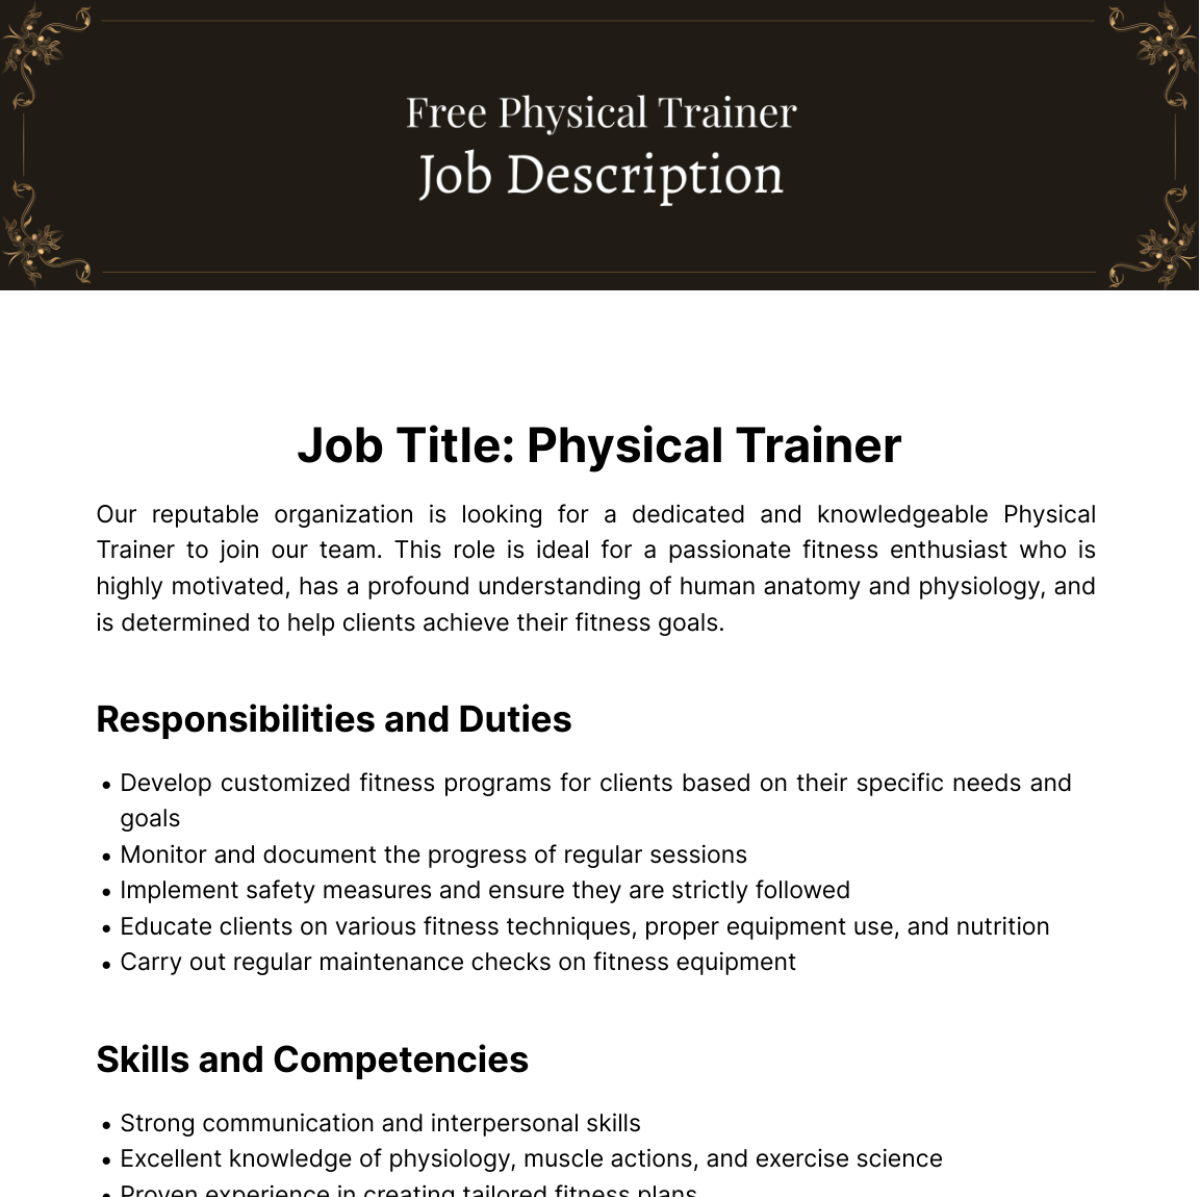 Free Physical Training Job Description Template